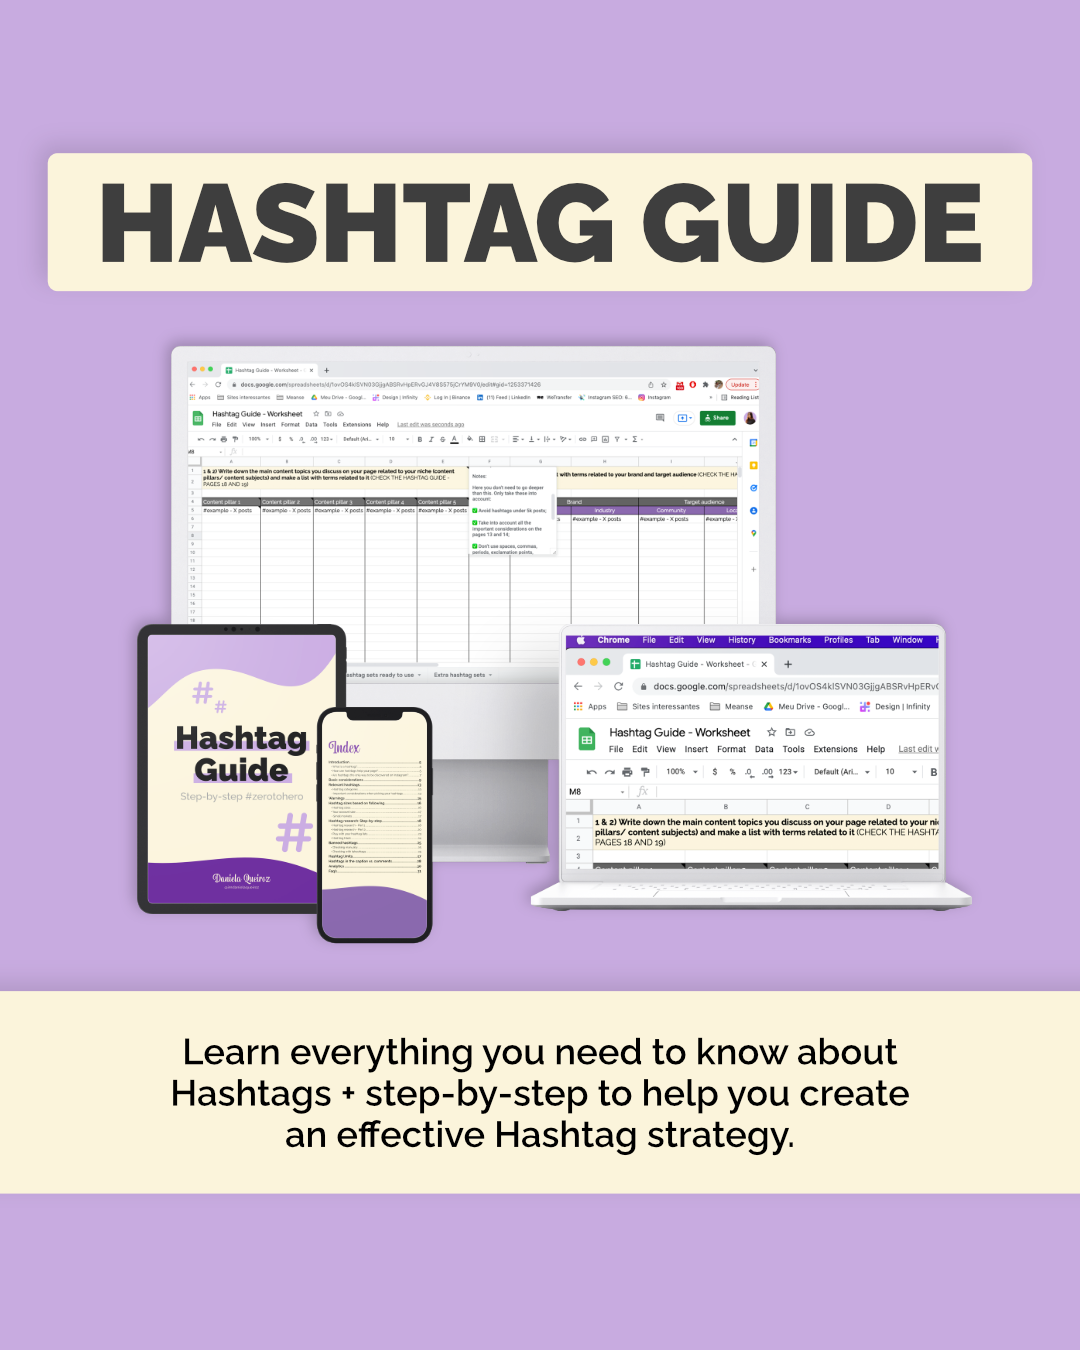 Hashtag Guide